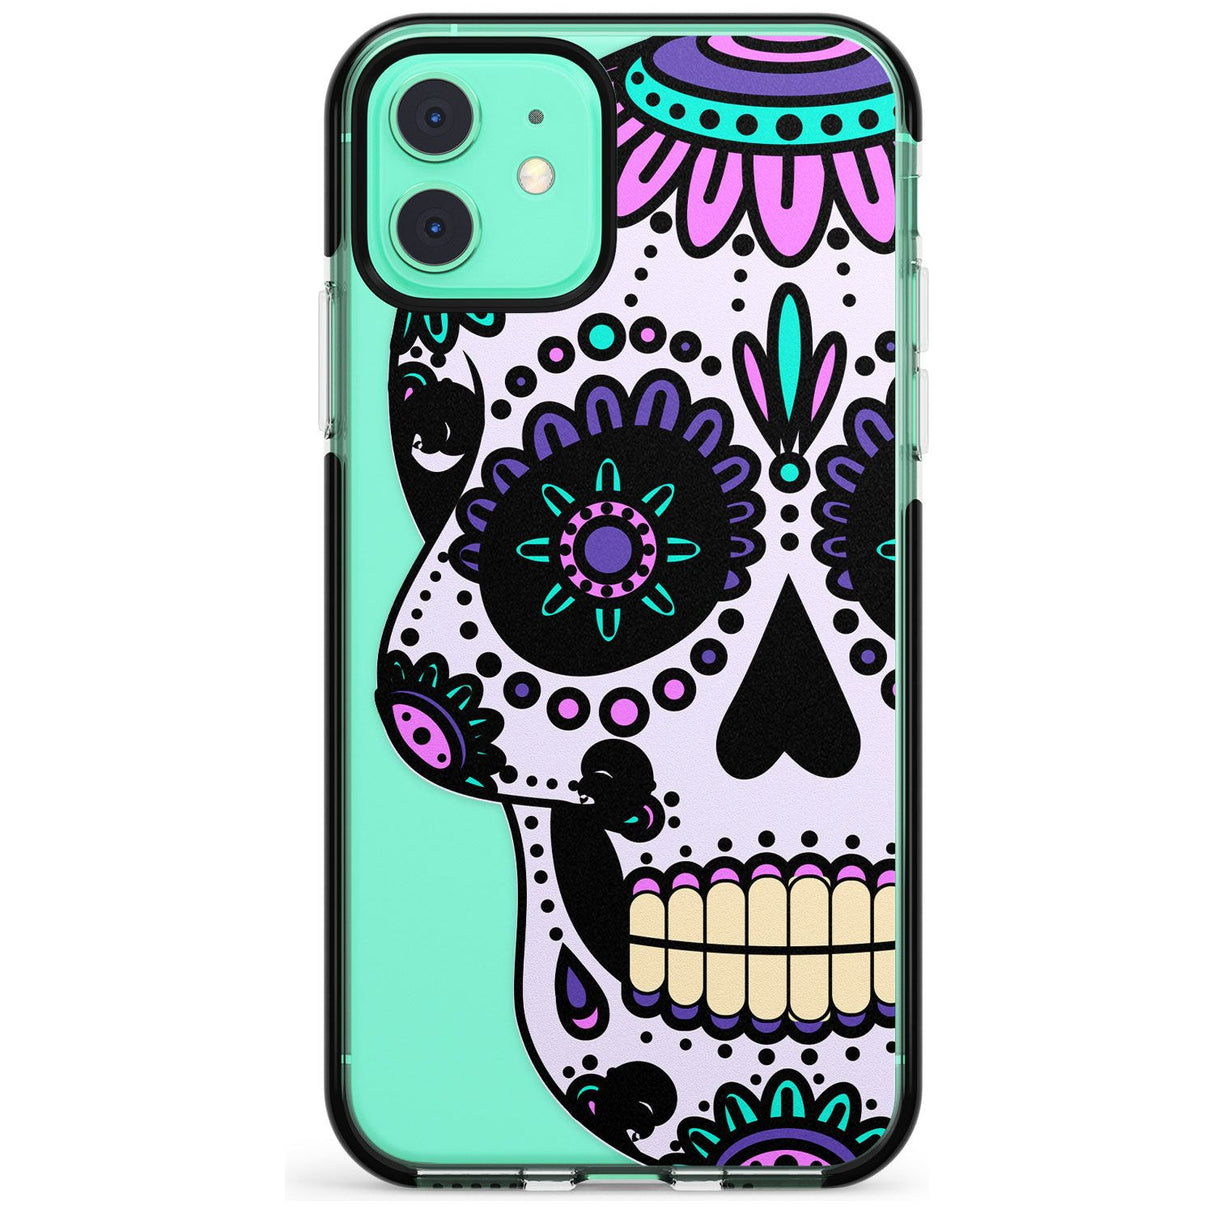 Violet Sugar Skull Black Impact Phone Case for iPhone 11 Pro Max